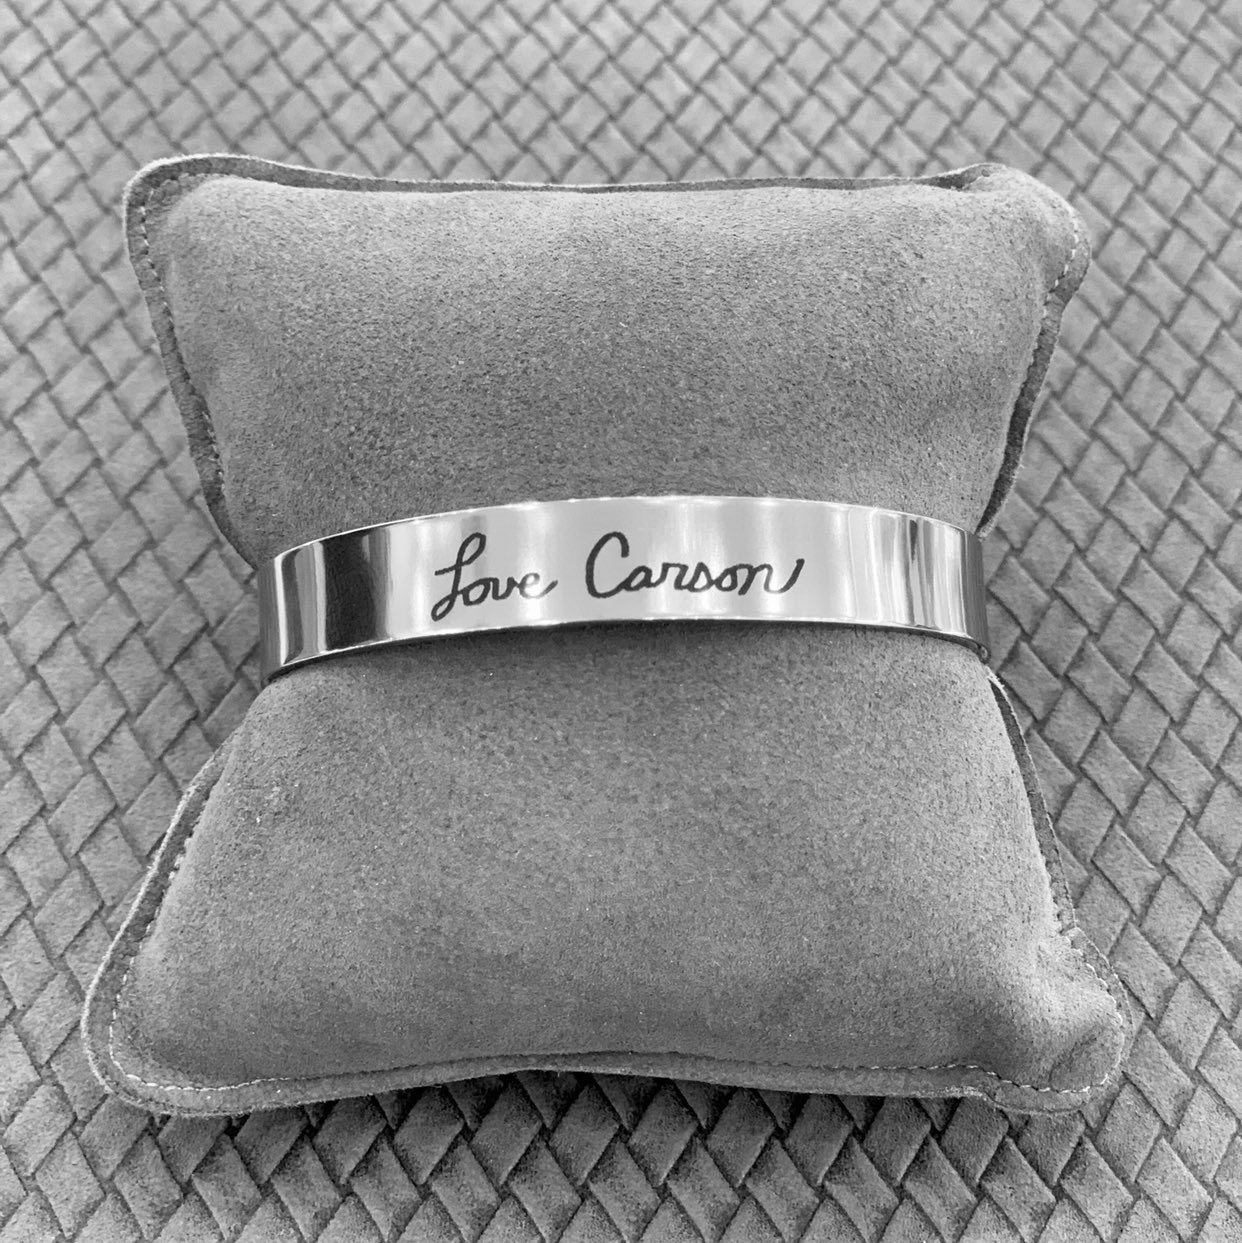 Carson Lueders  Silver Bracelet on Behance